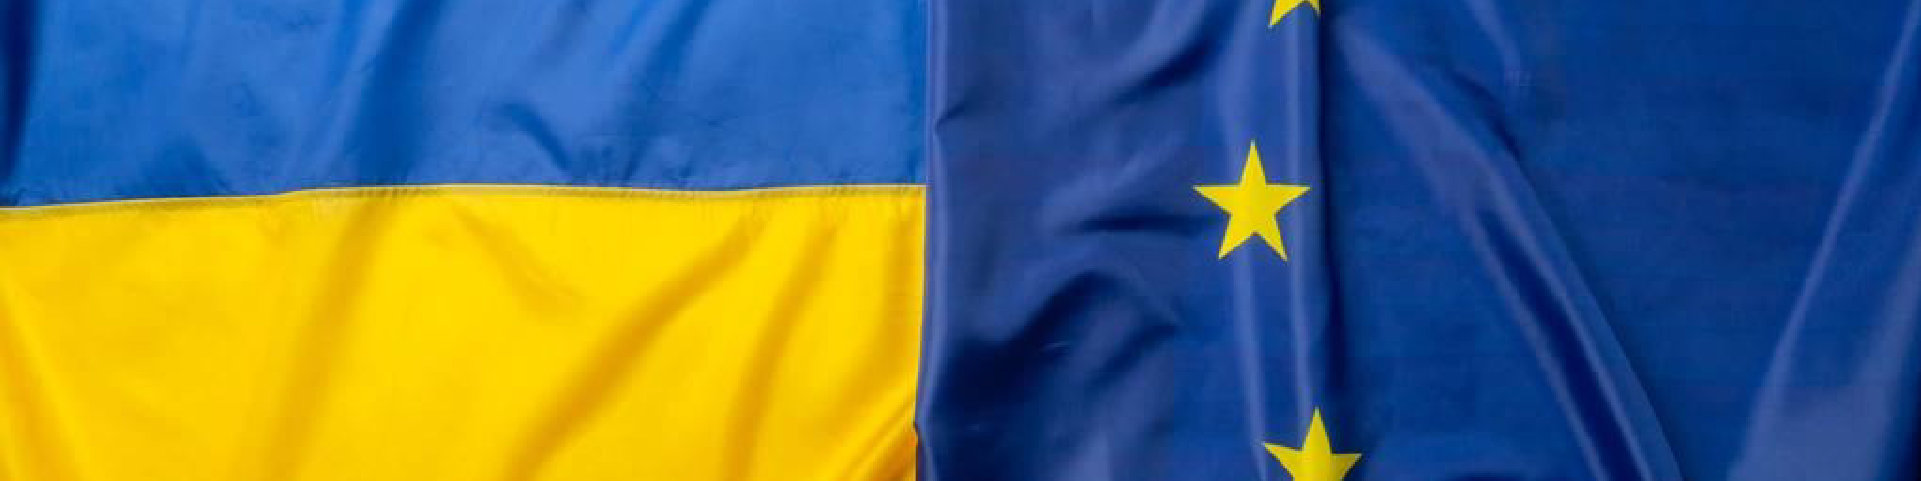 Solidarité de l'UE avec l'Ukraine